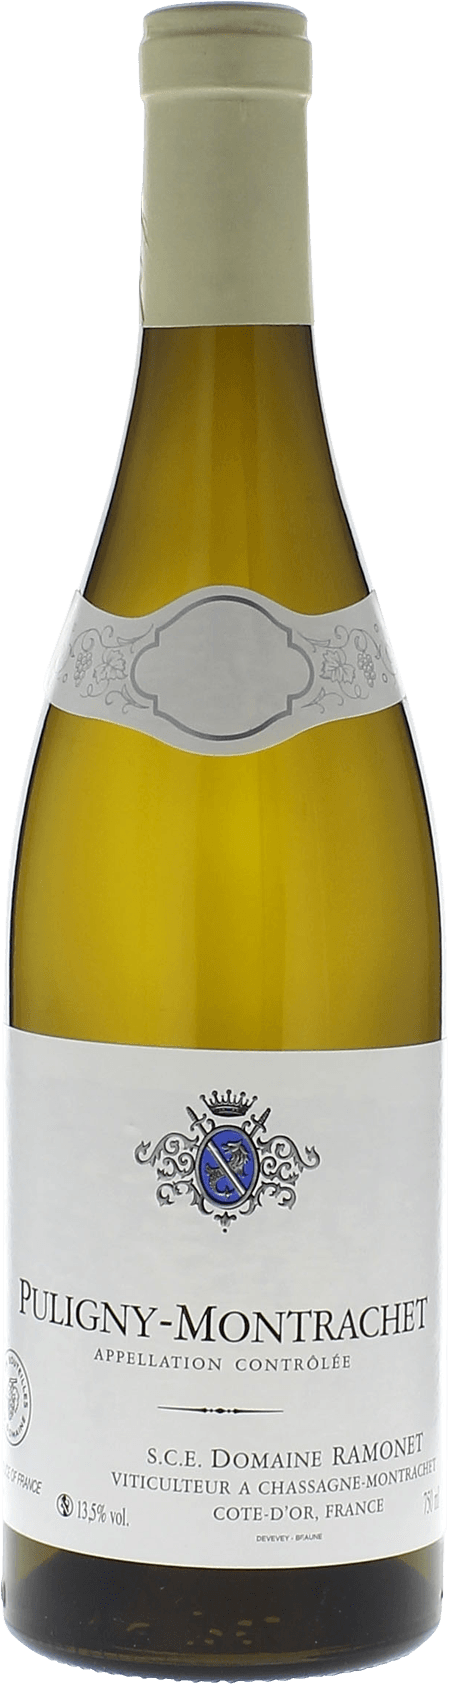 Puligny montrachet 2016 Domaine RAMONET, Bourgogne blanc